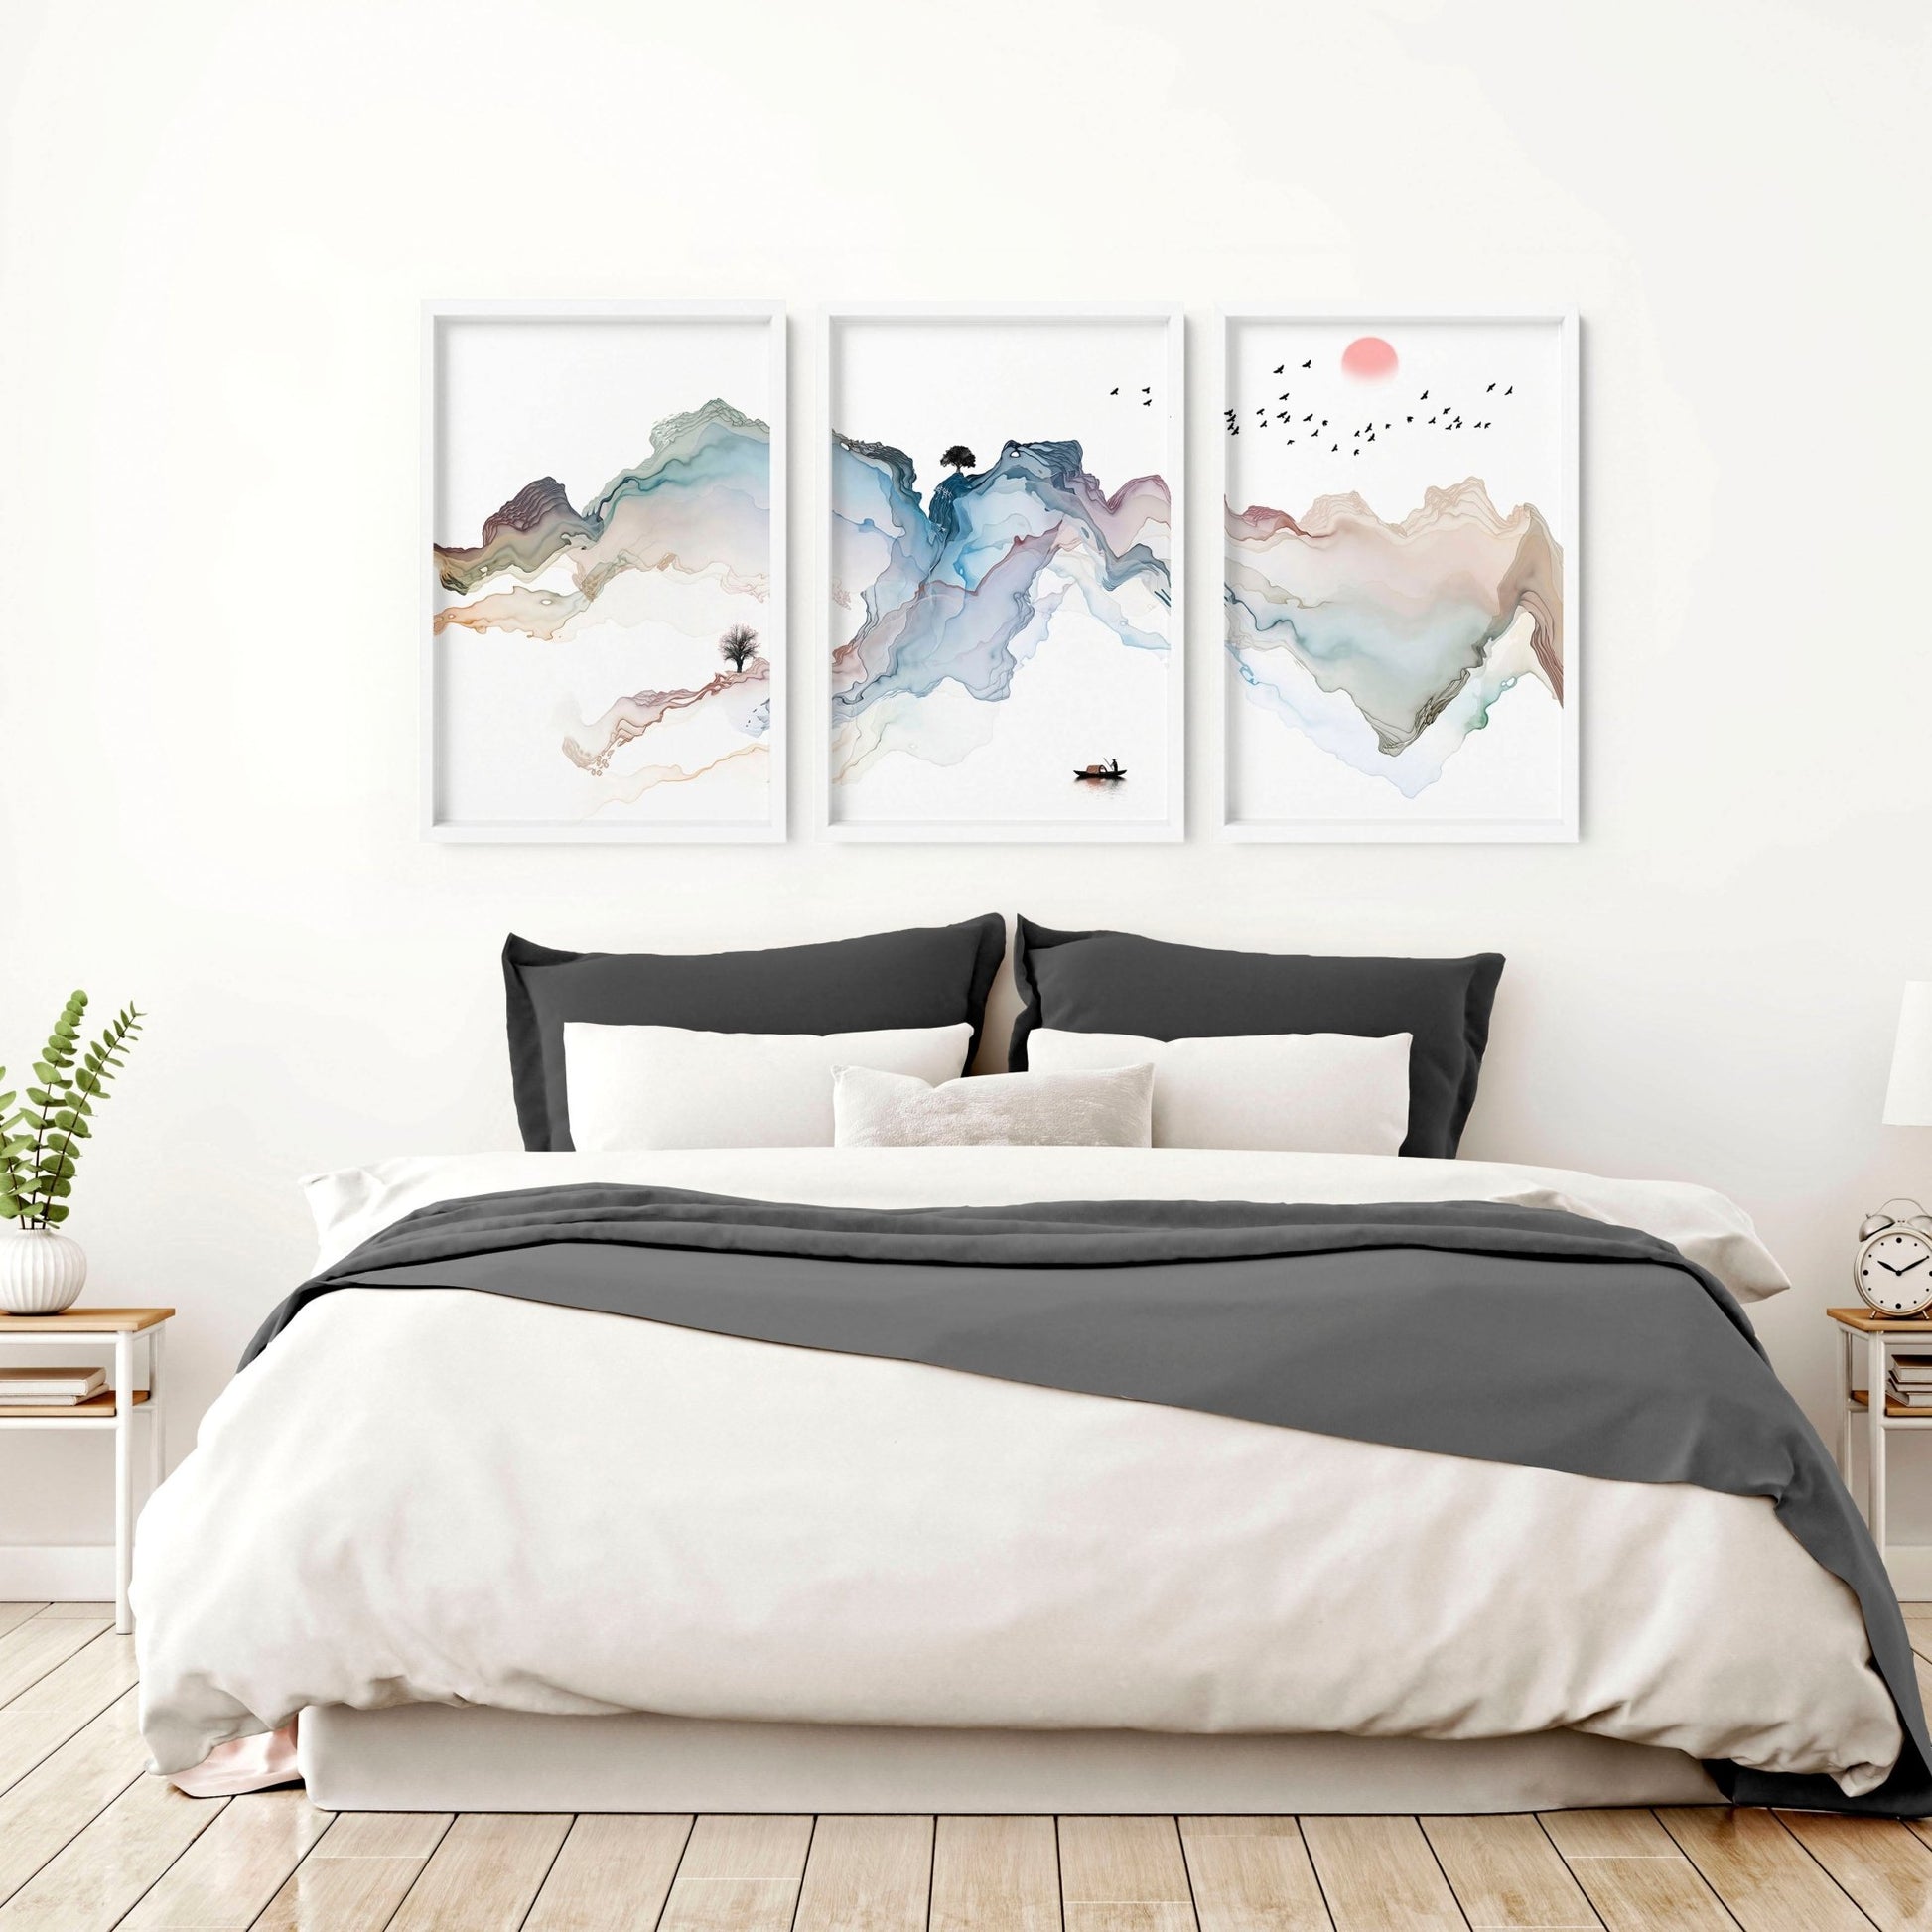 Japanese bedroom decor | set of 3 wall art prints